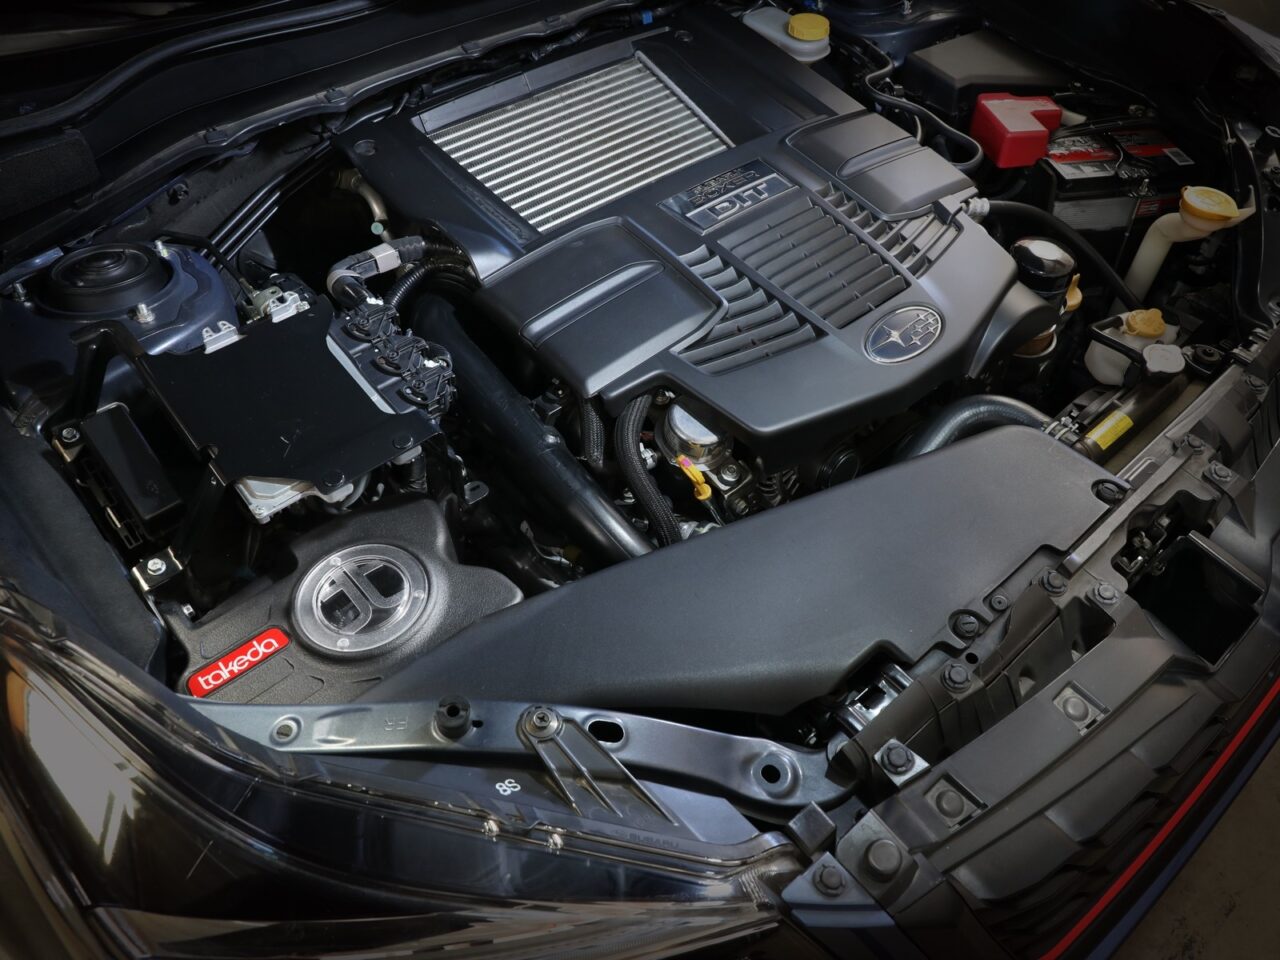 Under the hood view of aFe Takeda after-market intake system installed on 2018 Subaru Forester engine